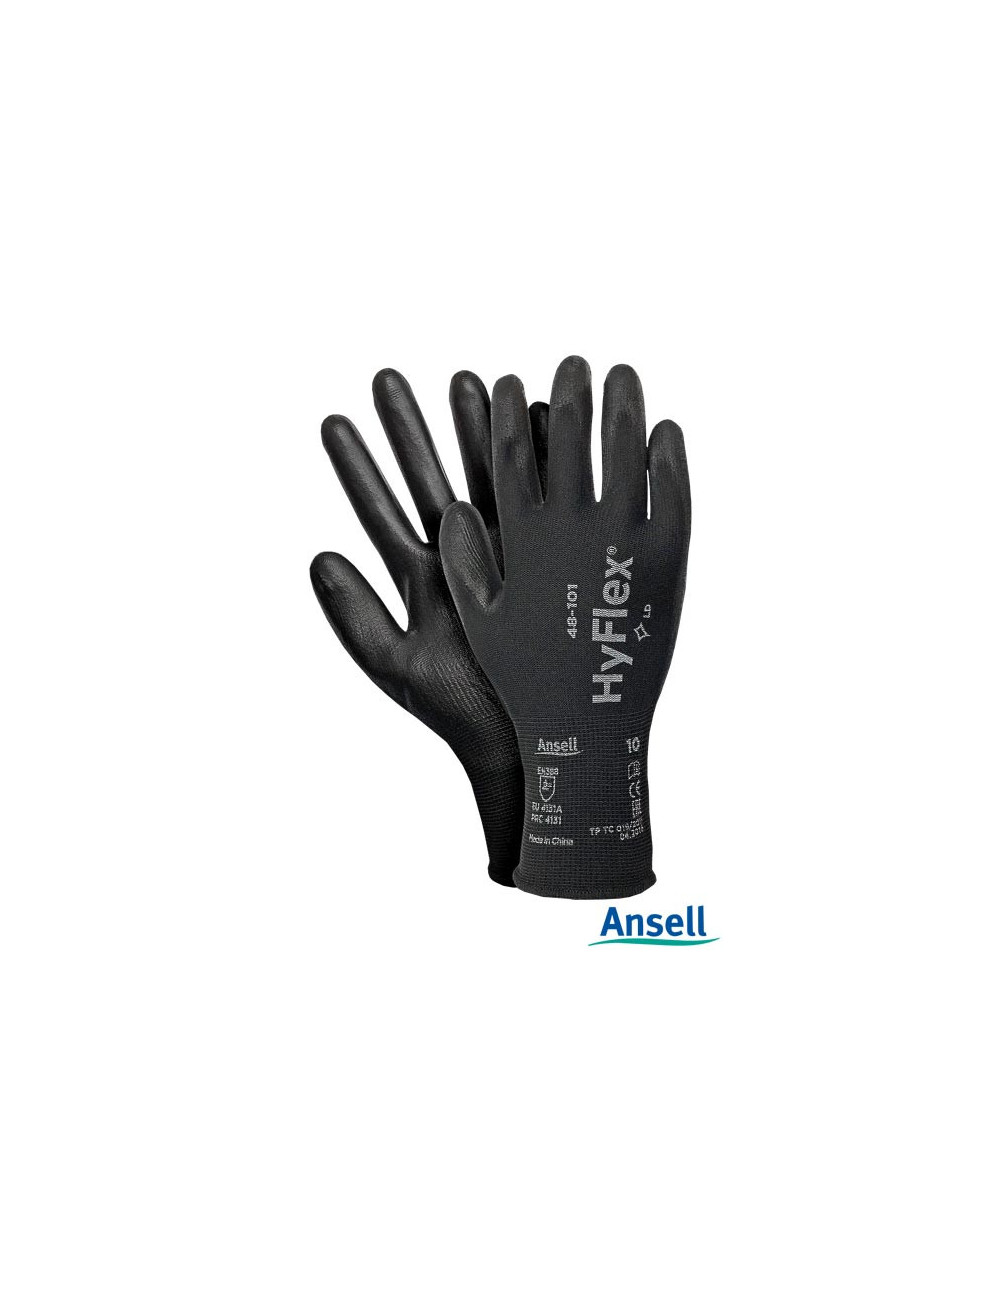 Rasensil48-101 bb Schutzhandschuhe schwarz-schwarz Ansell